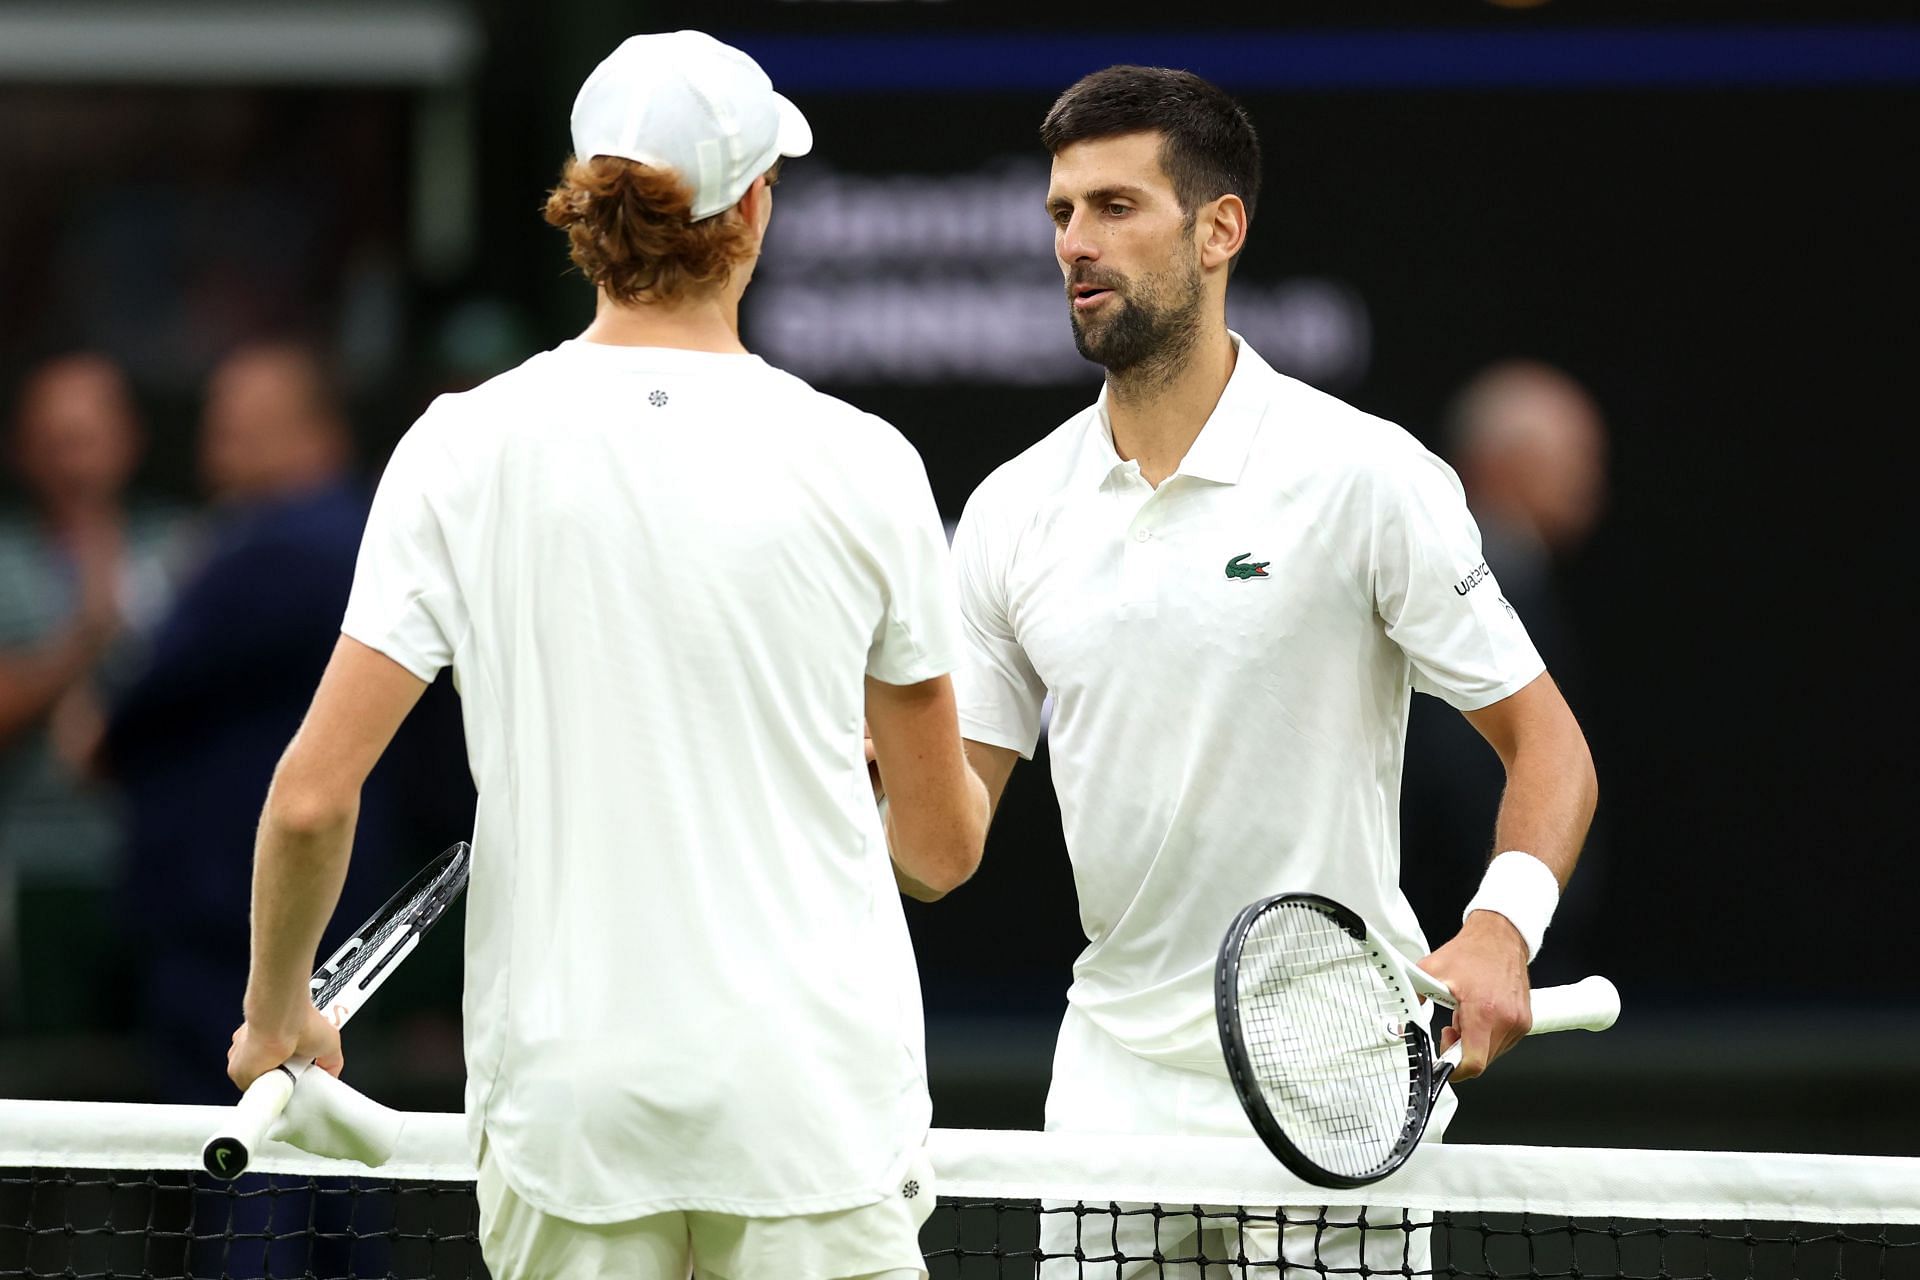 Djokovic overcame a trong challenge from Jannik Sinner in the Wimbledon semifinals